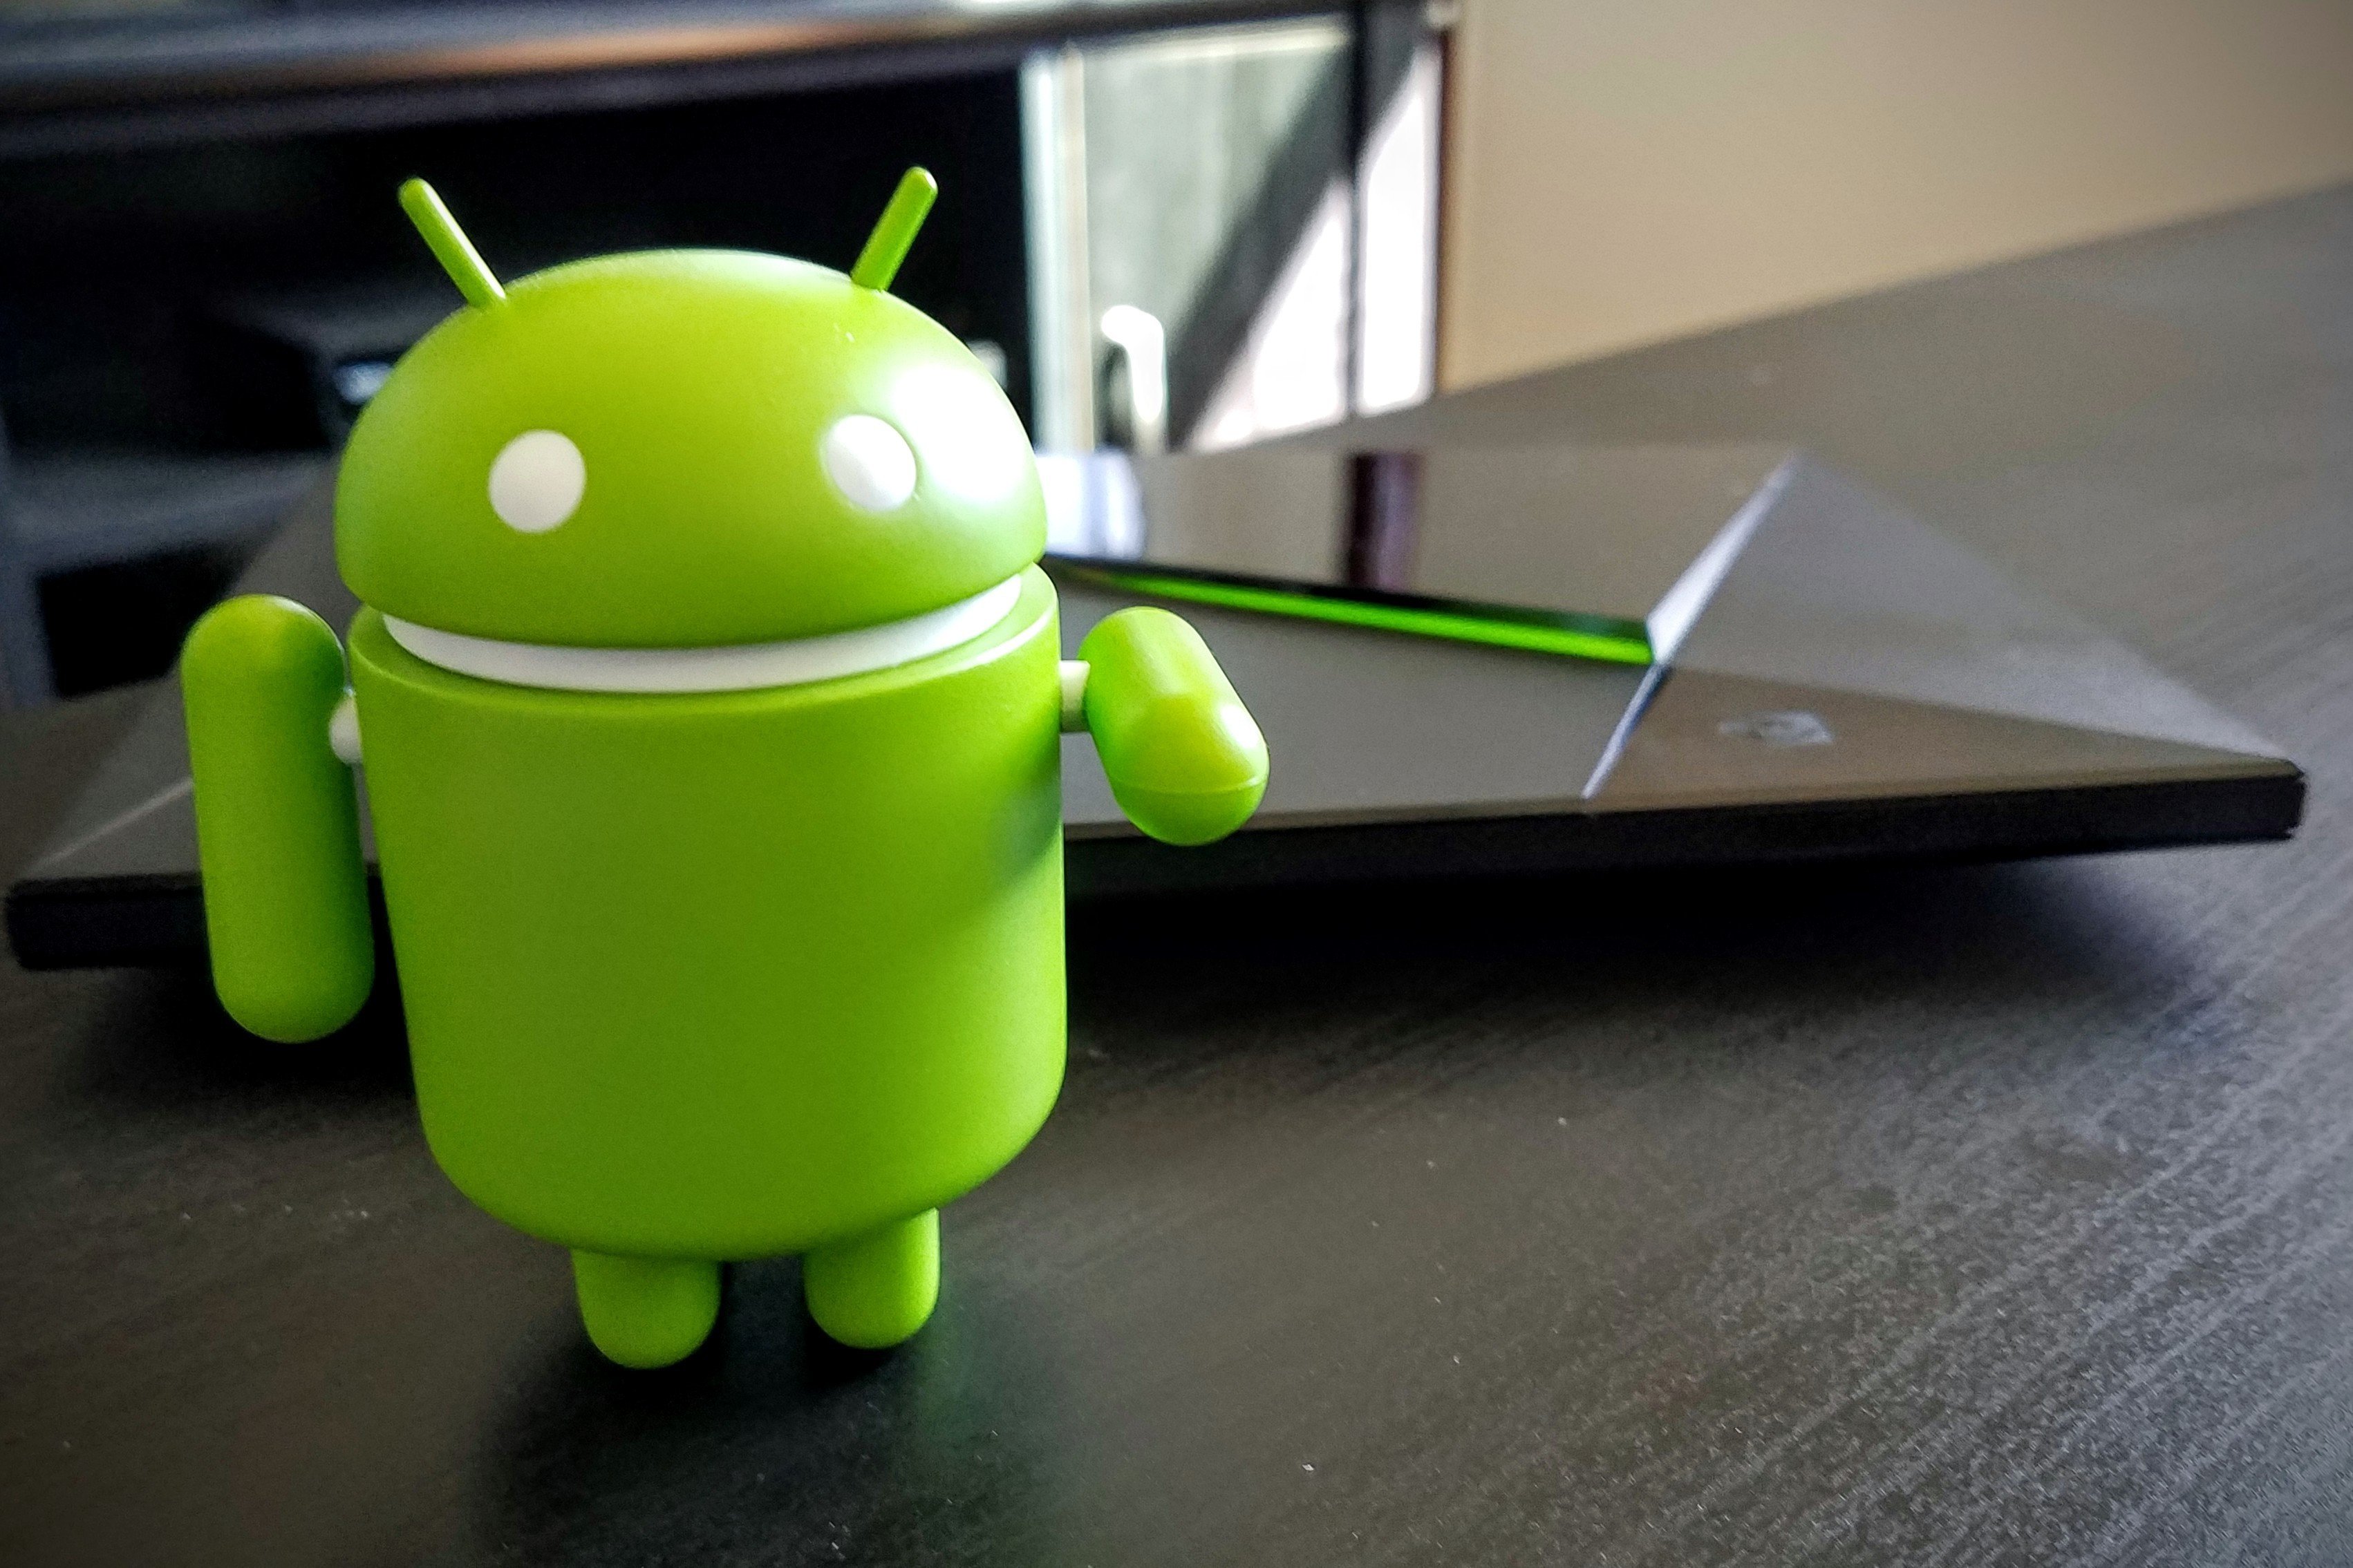 Фотография андроида. Андроид. ОС андроид. Операционная система Android. Андроид зеленый человечек.